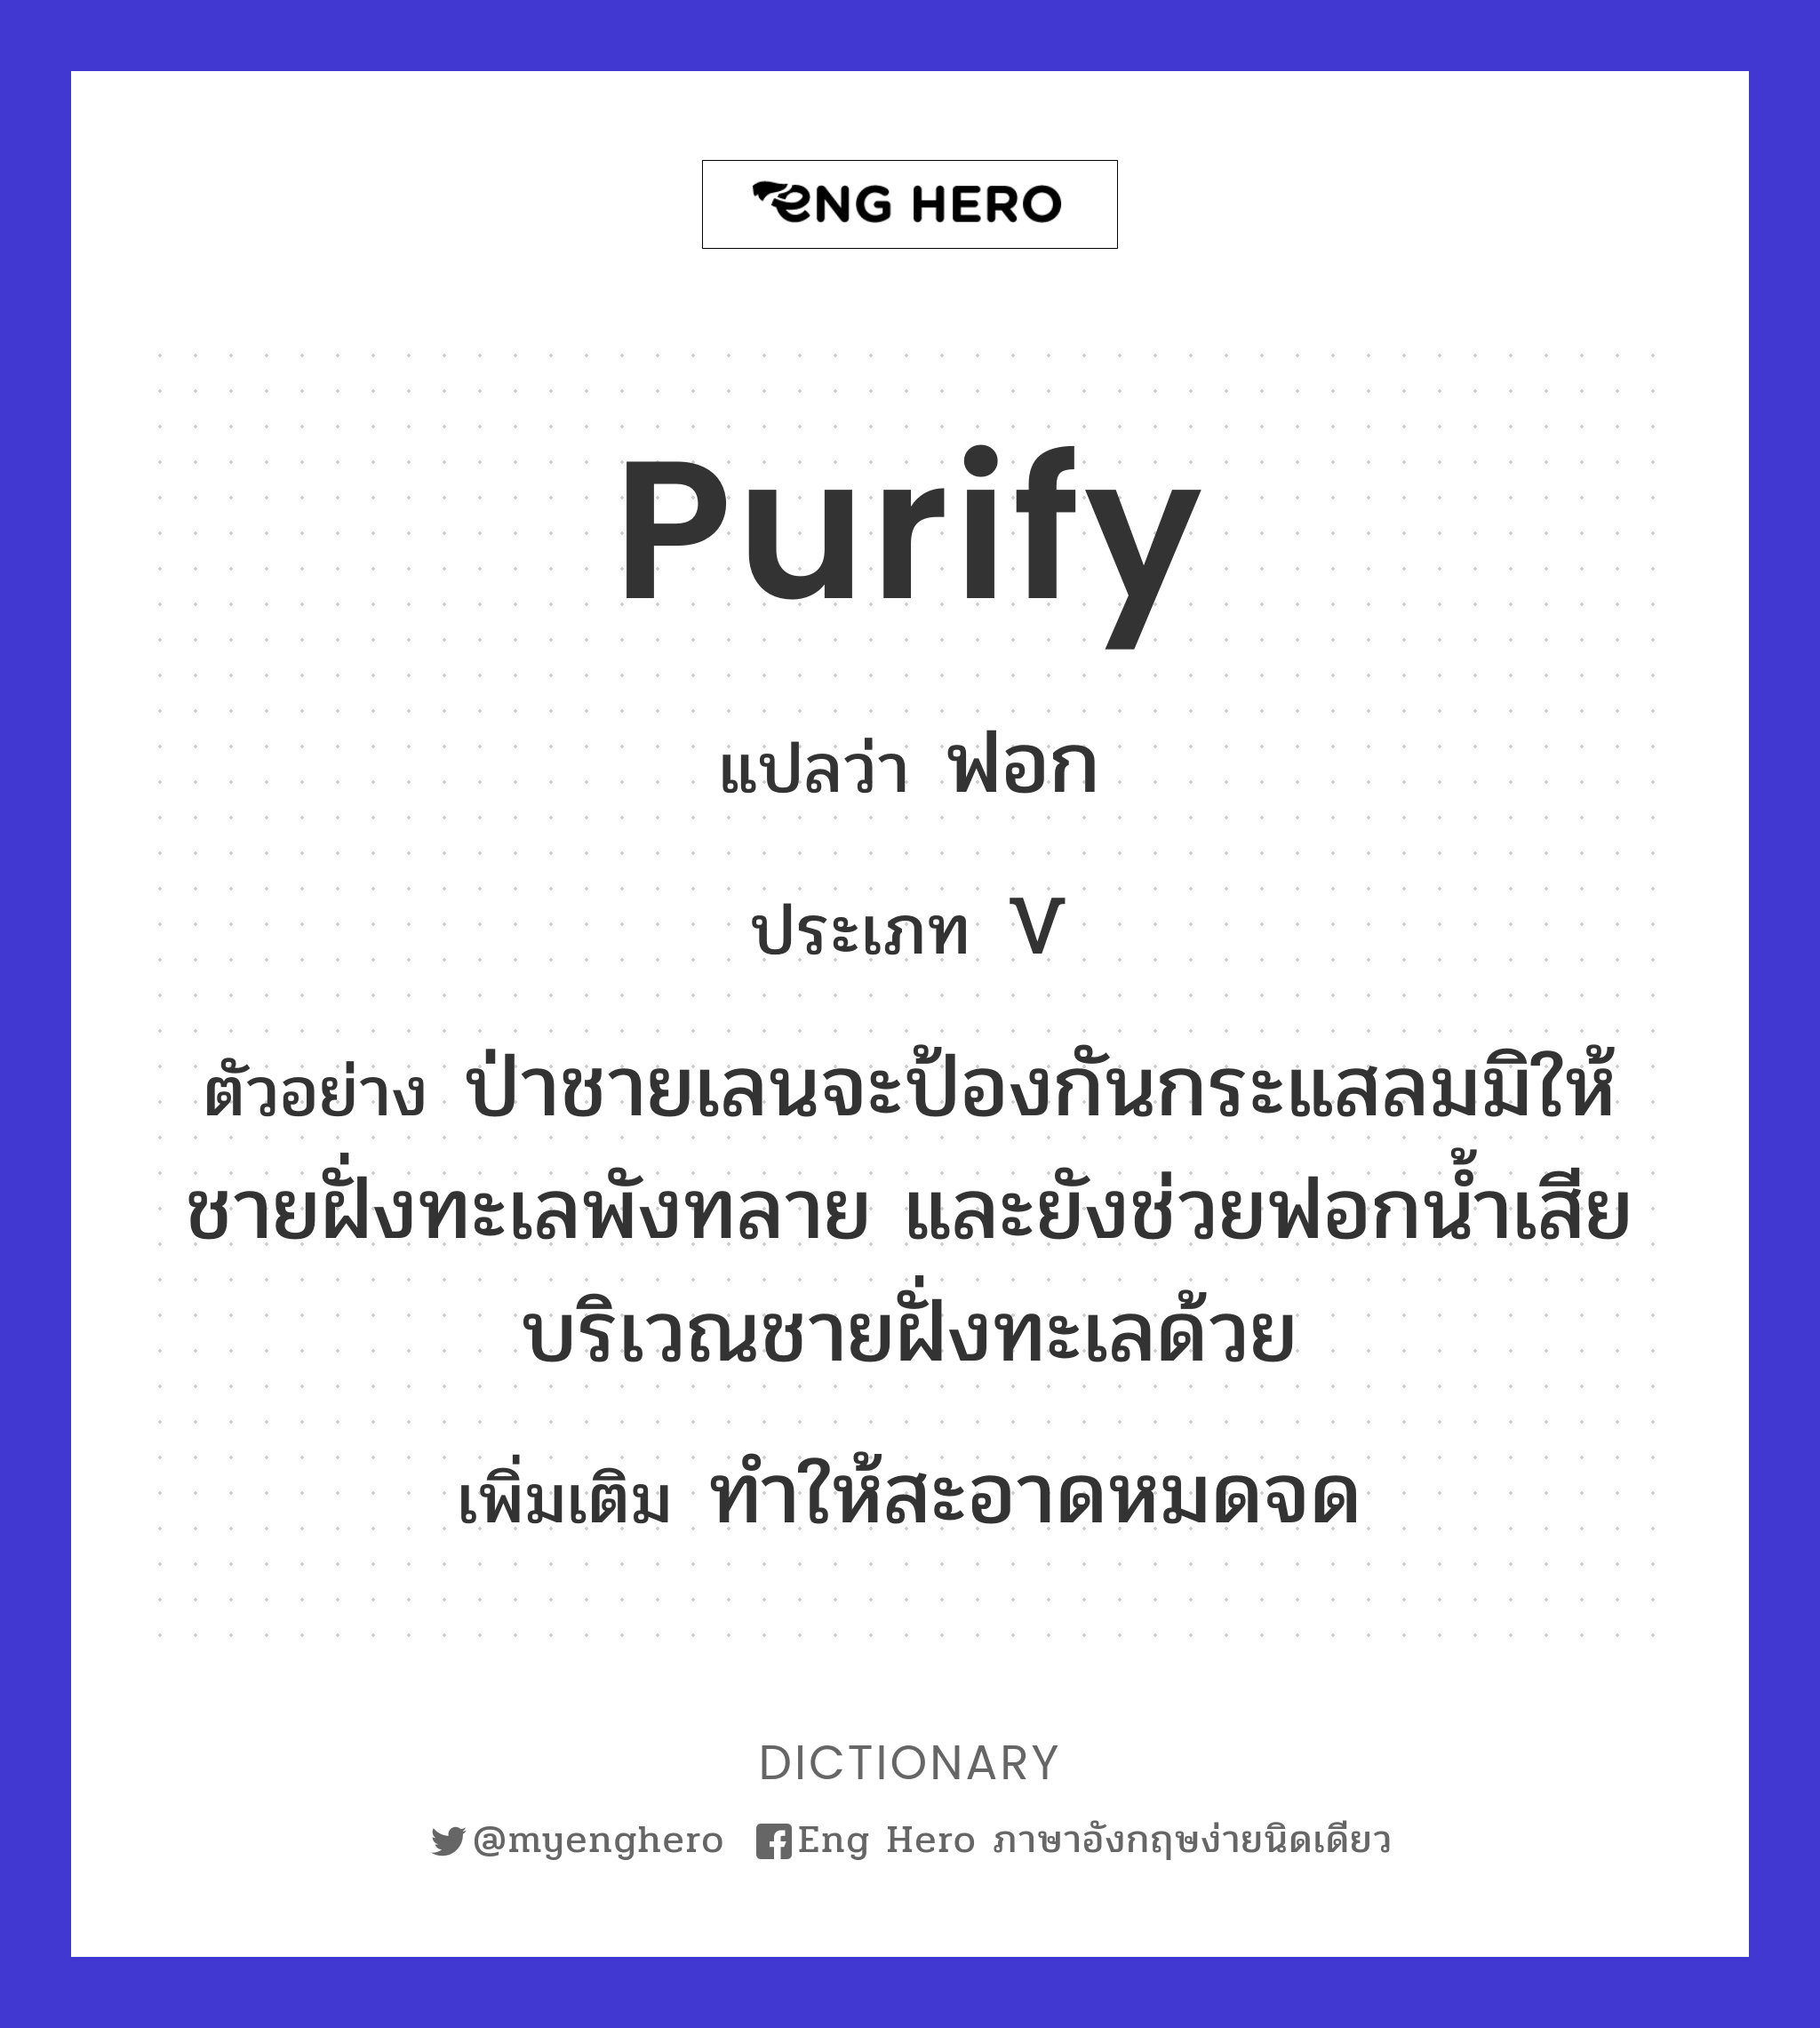 purify